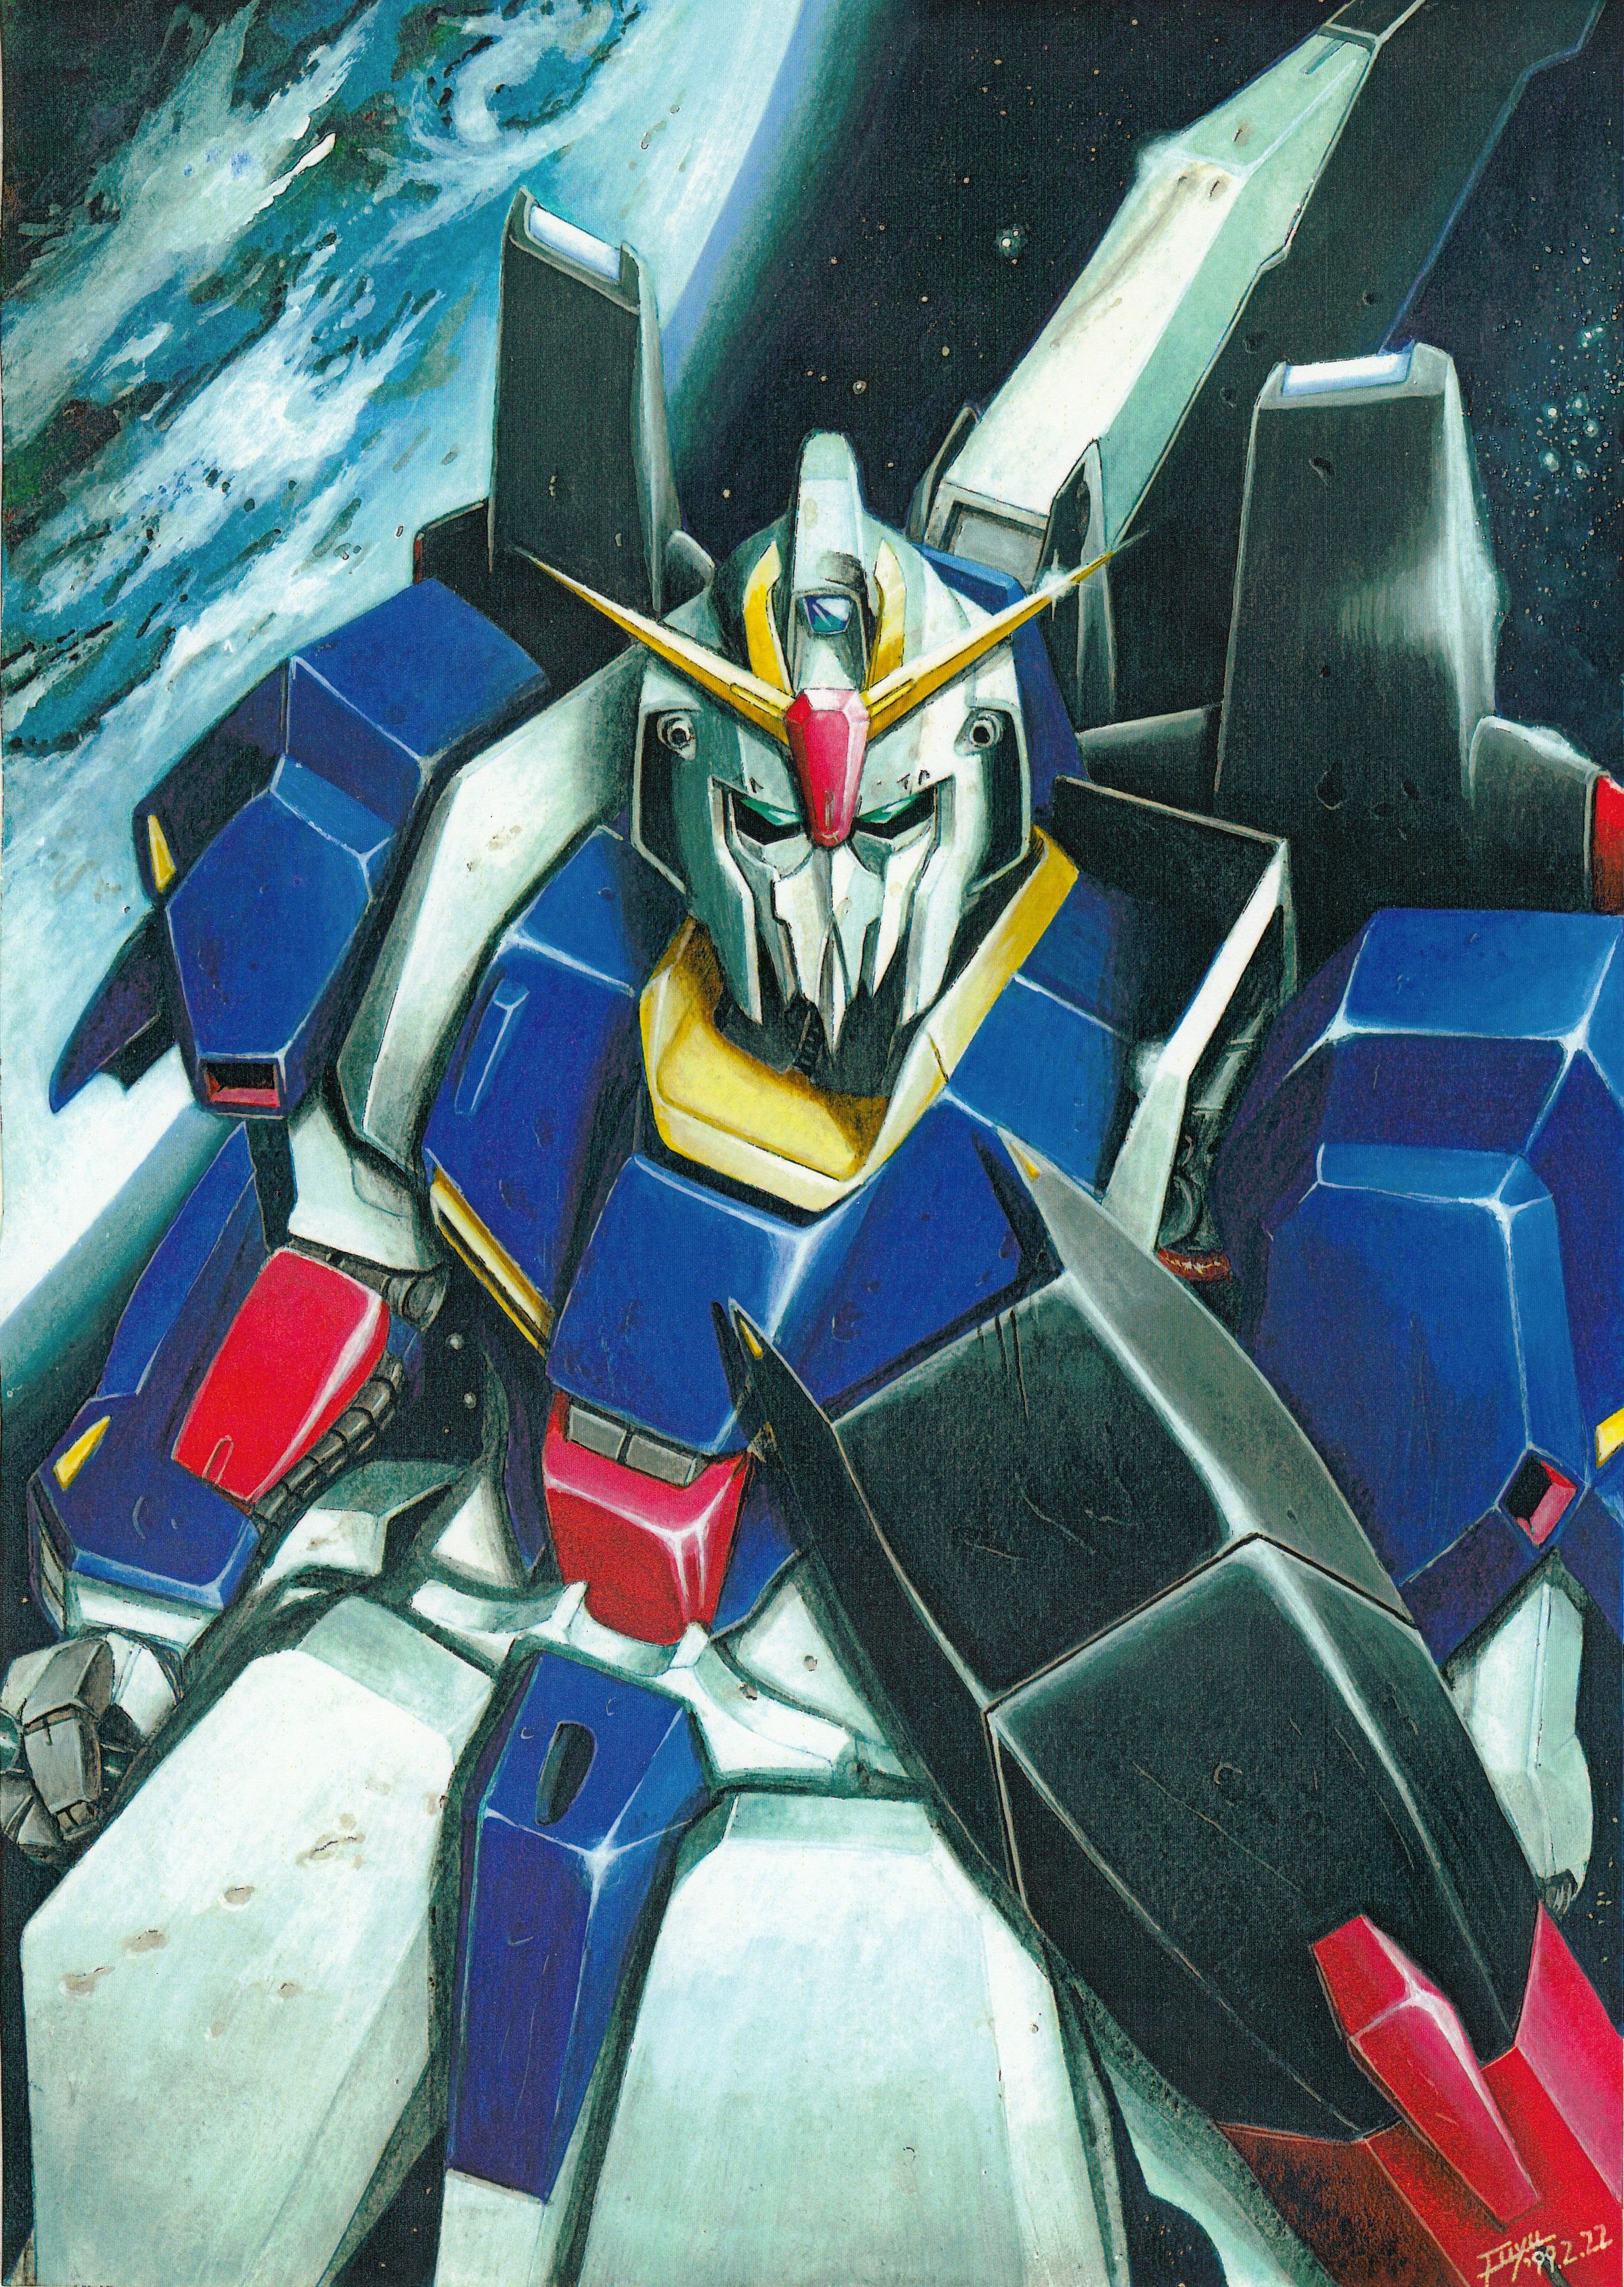 Anime Mechs Super Robot Taisen Gundam Artwork Digital Art Fan Art Zeta Gundam Mobile Suit Zeta Gunda 2400x3380